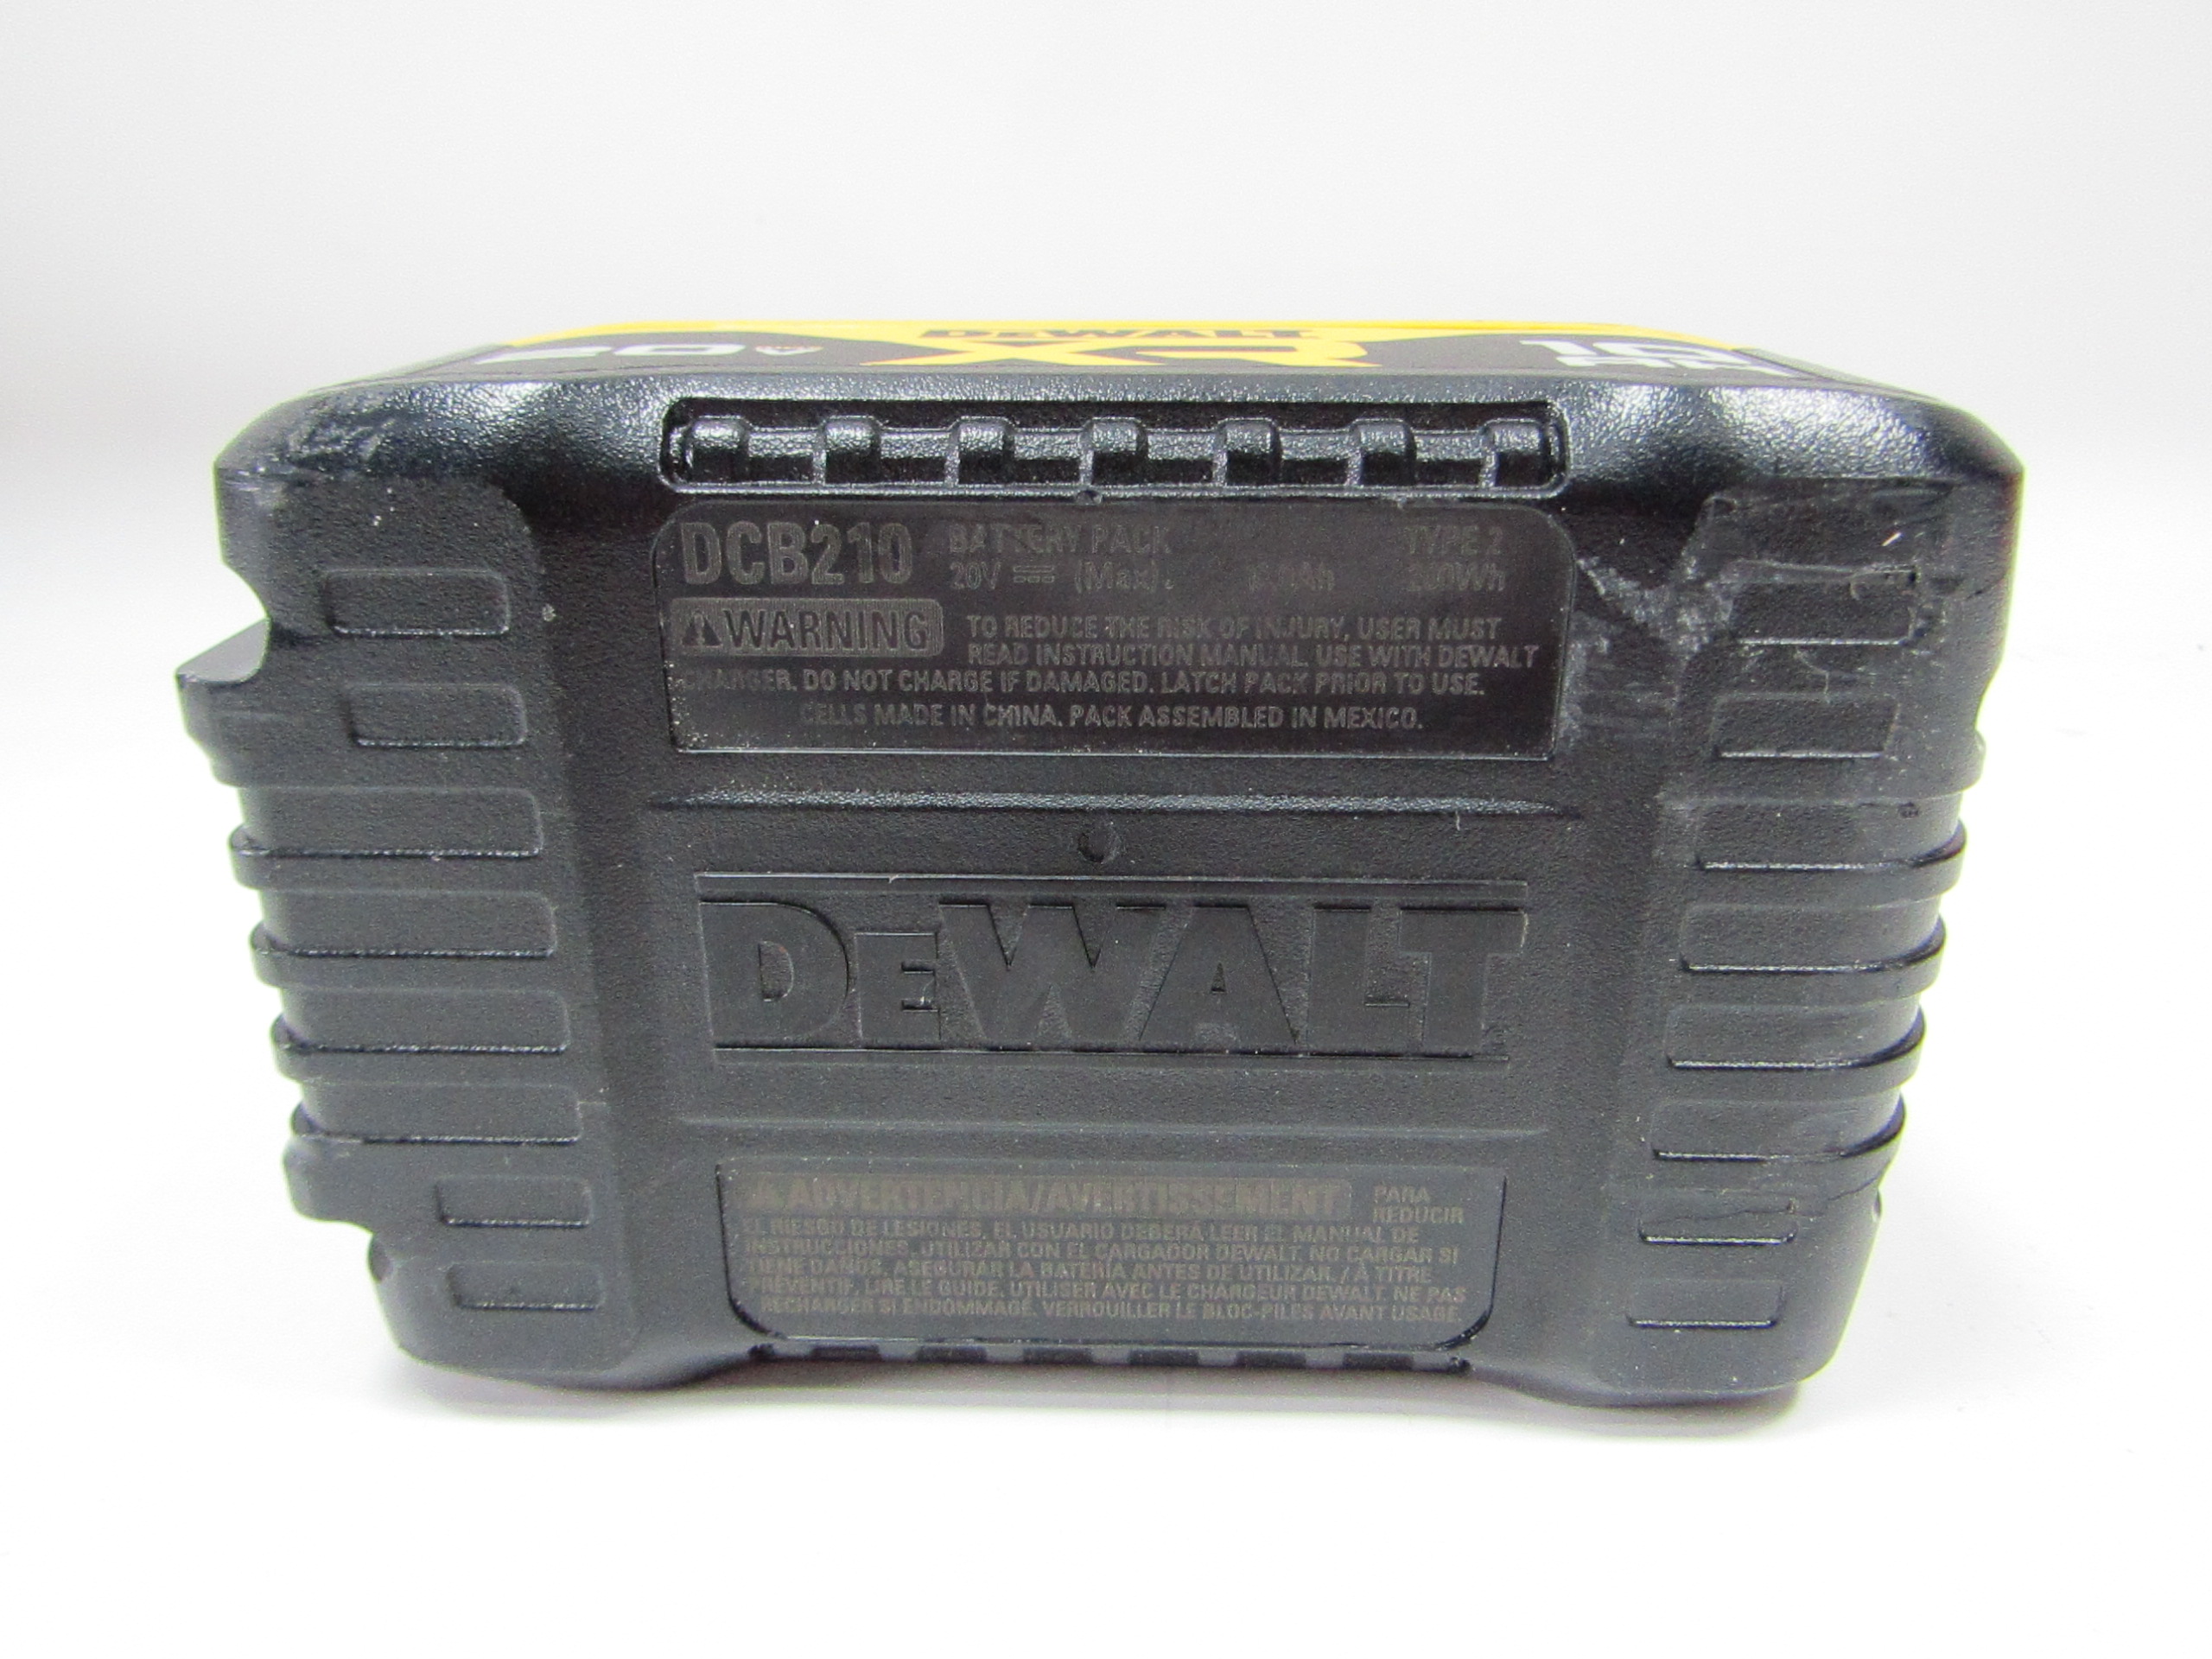 DeWALT 20V Max XR 10.0Ah Lithium Ion Battery